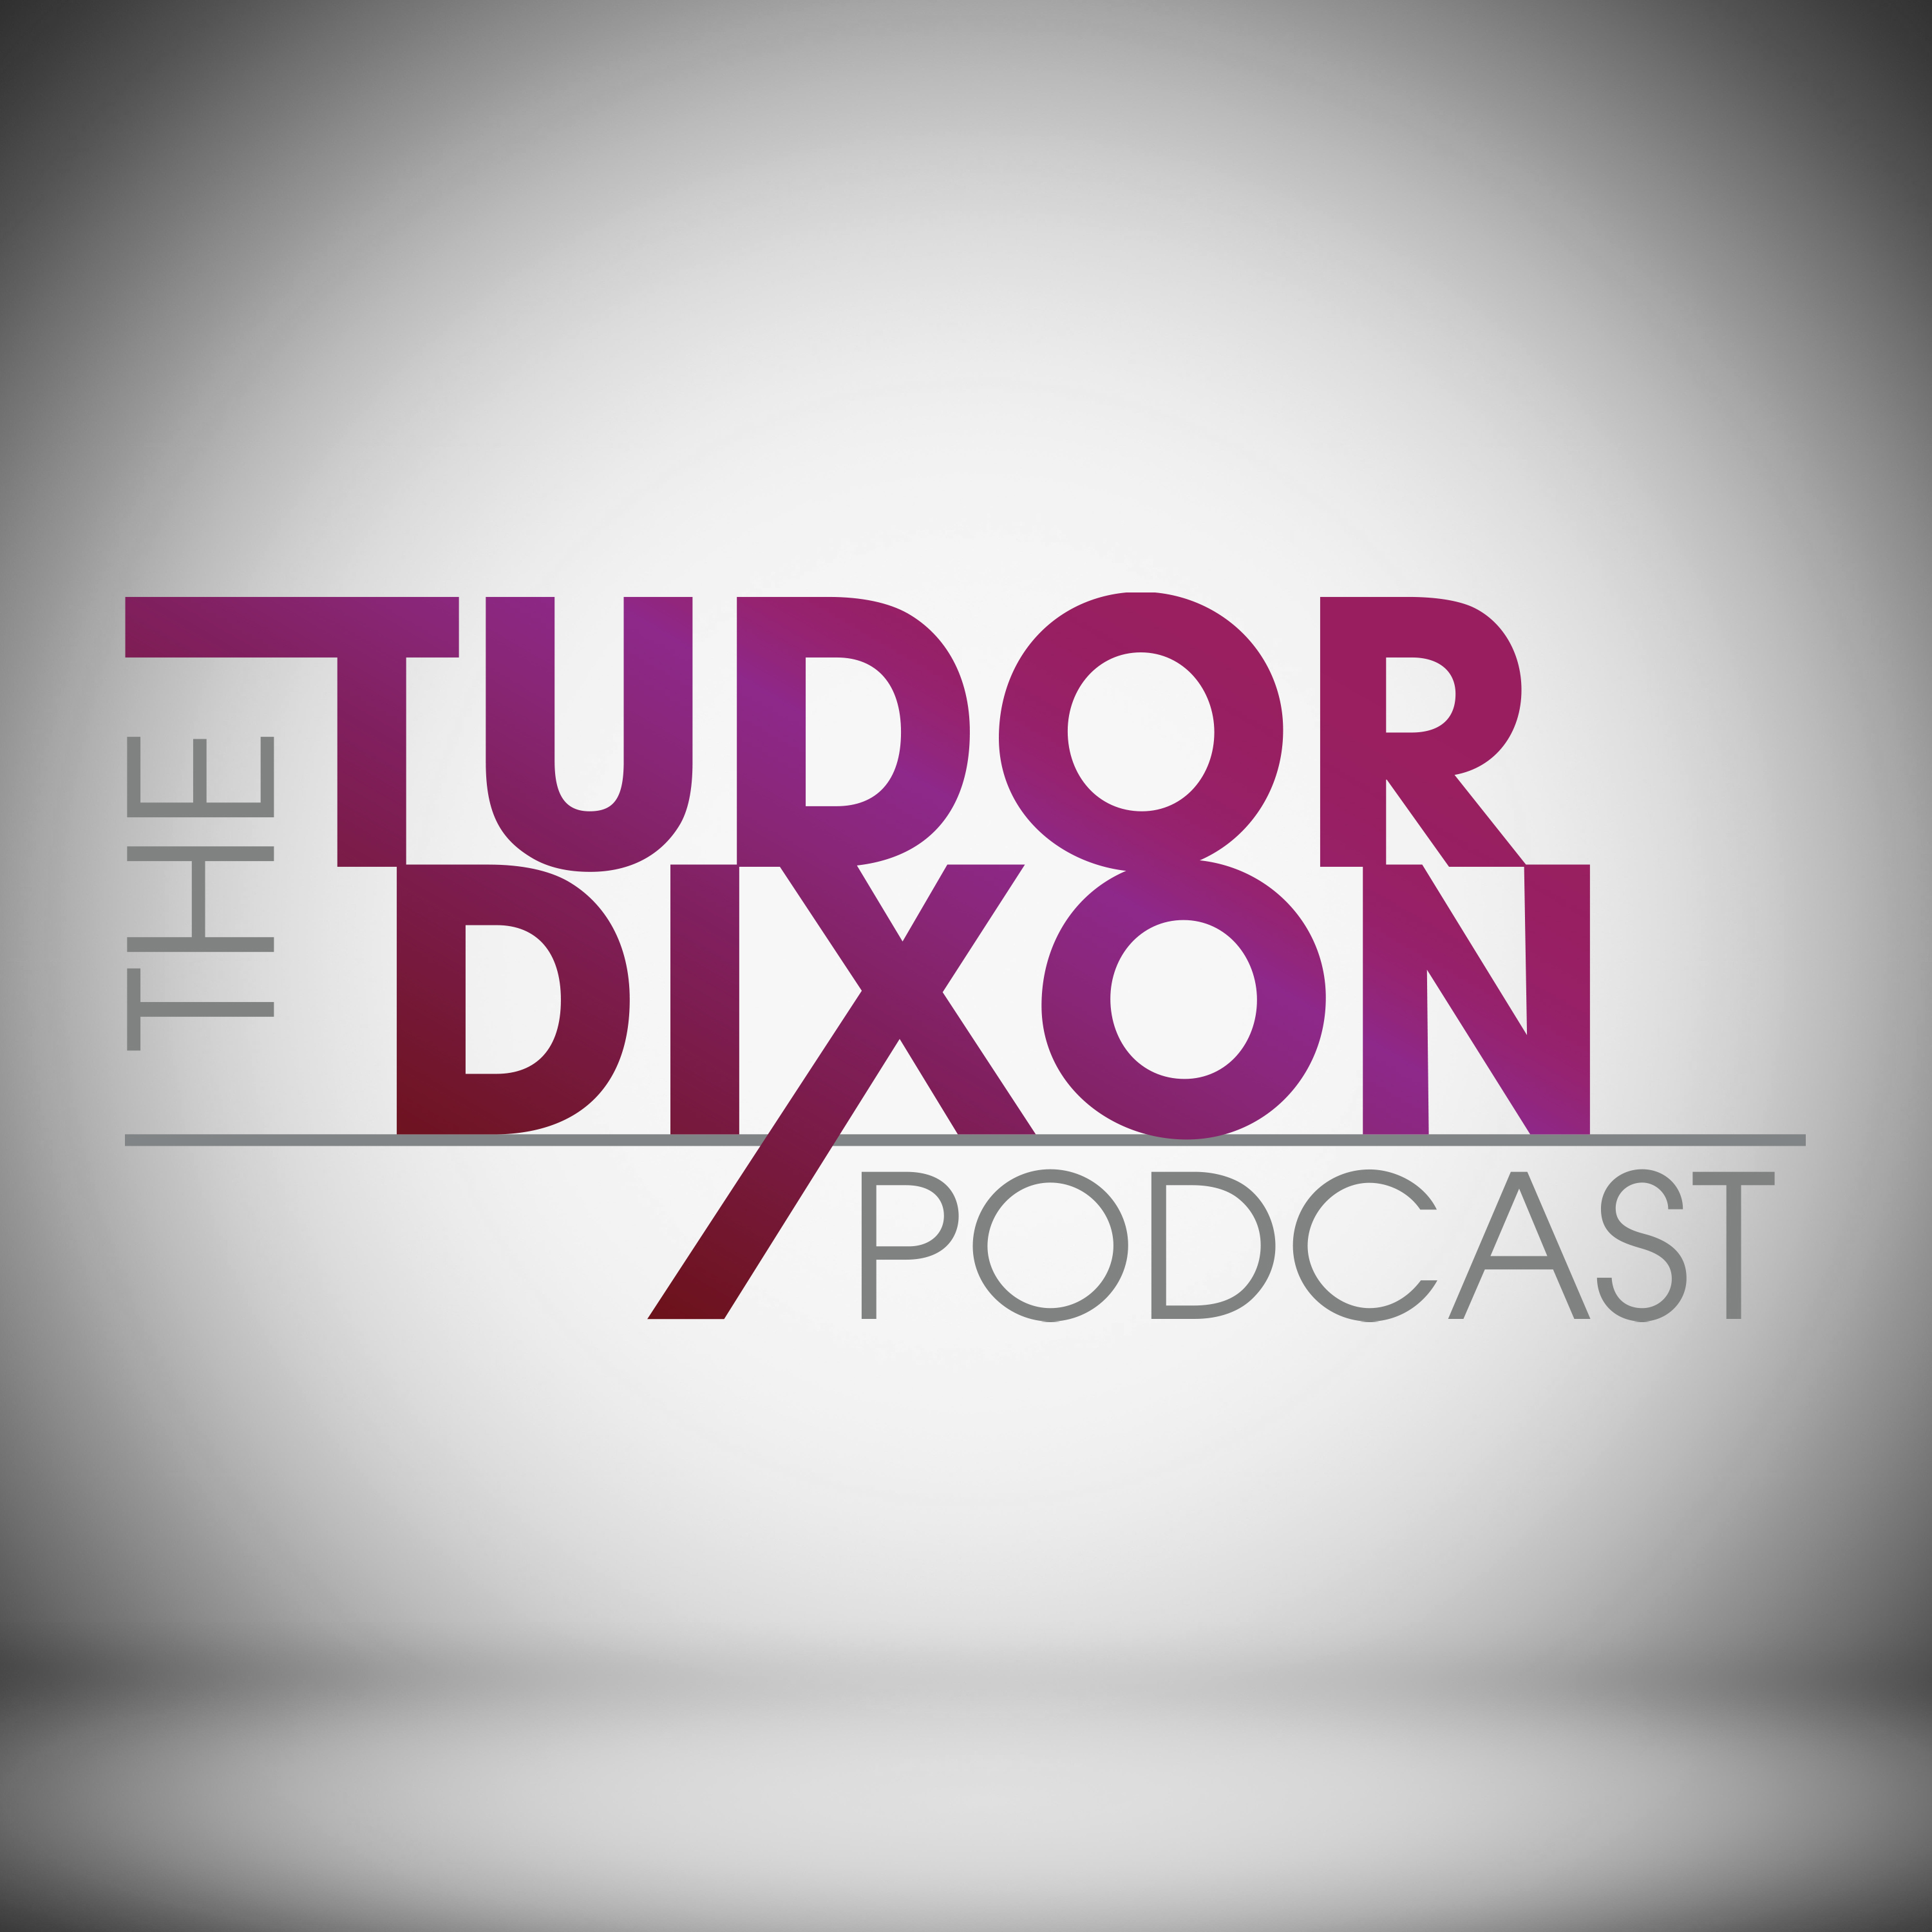 The Tudor Dixon Podcast Debuting Monday, March 20